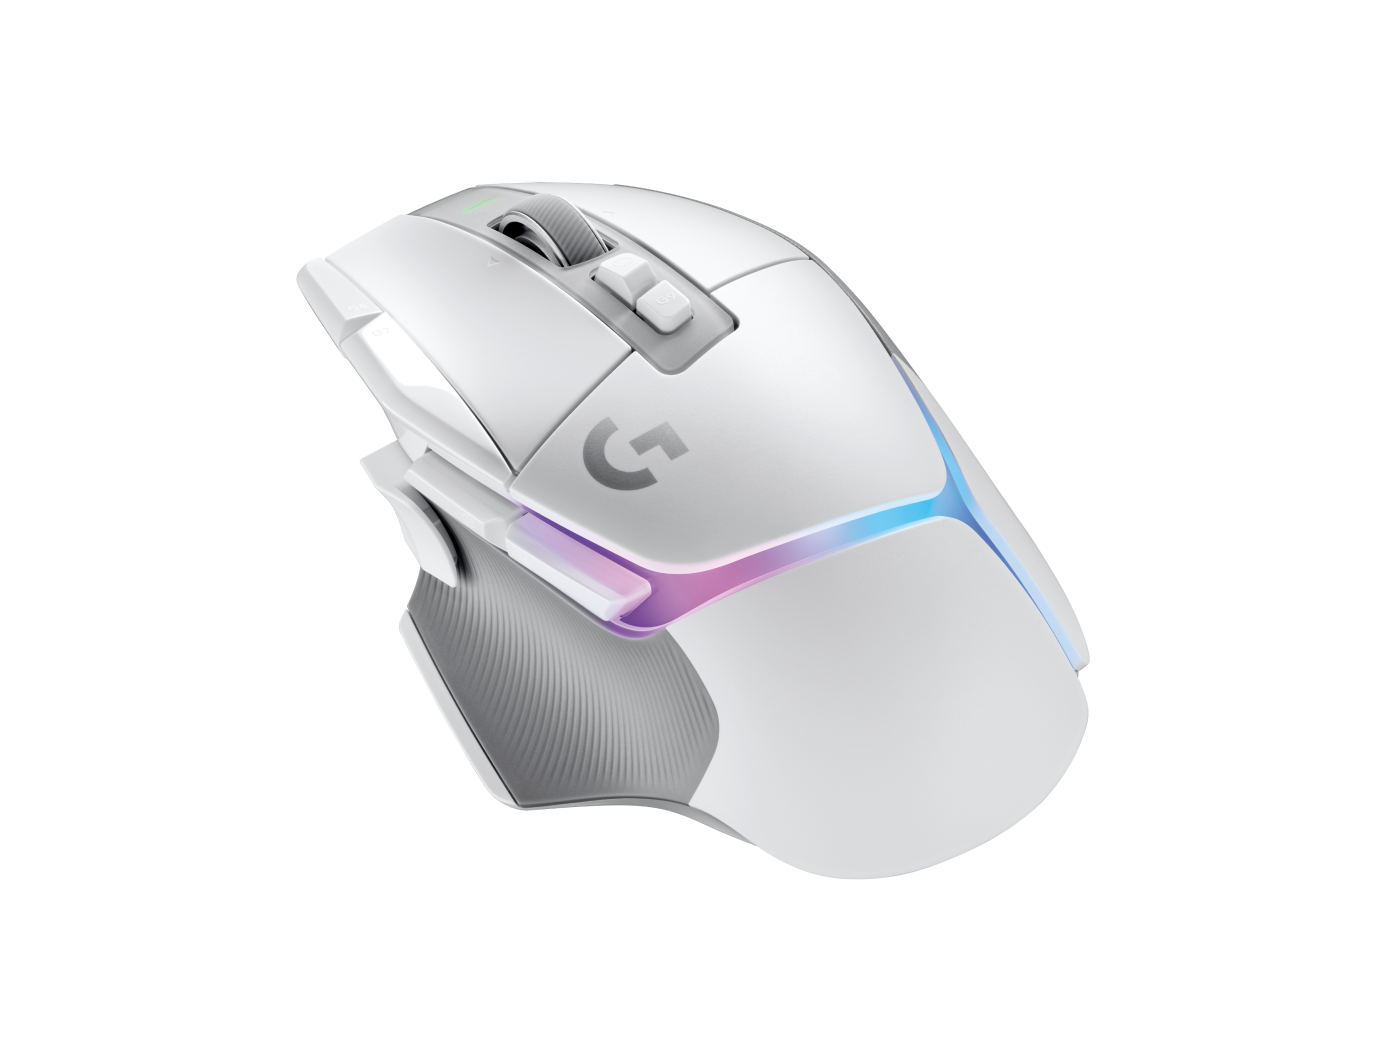 Forretningsmand Donation sø G502 X Plus Wireless RGB Gaming Mouse | Logitech G